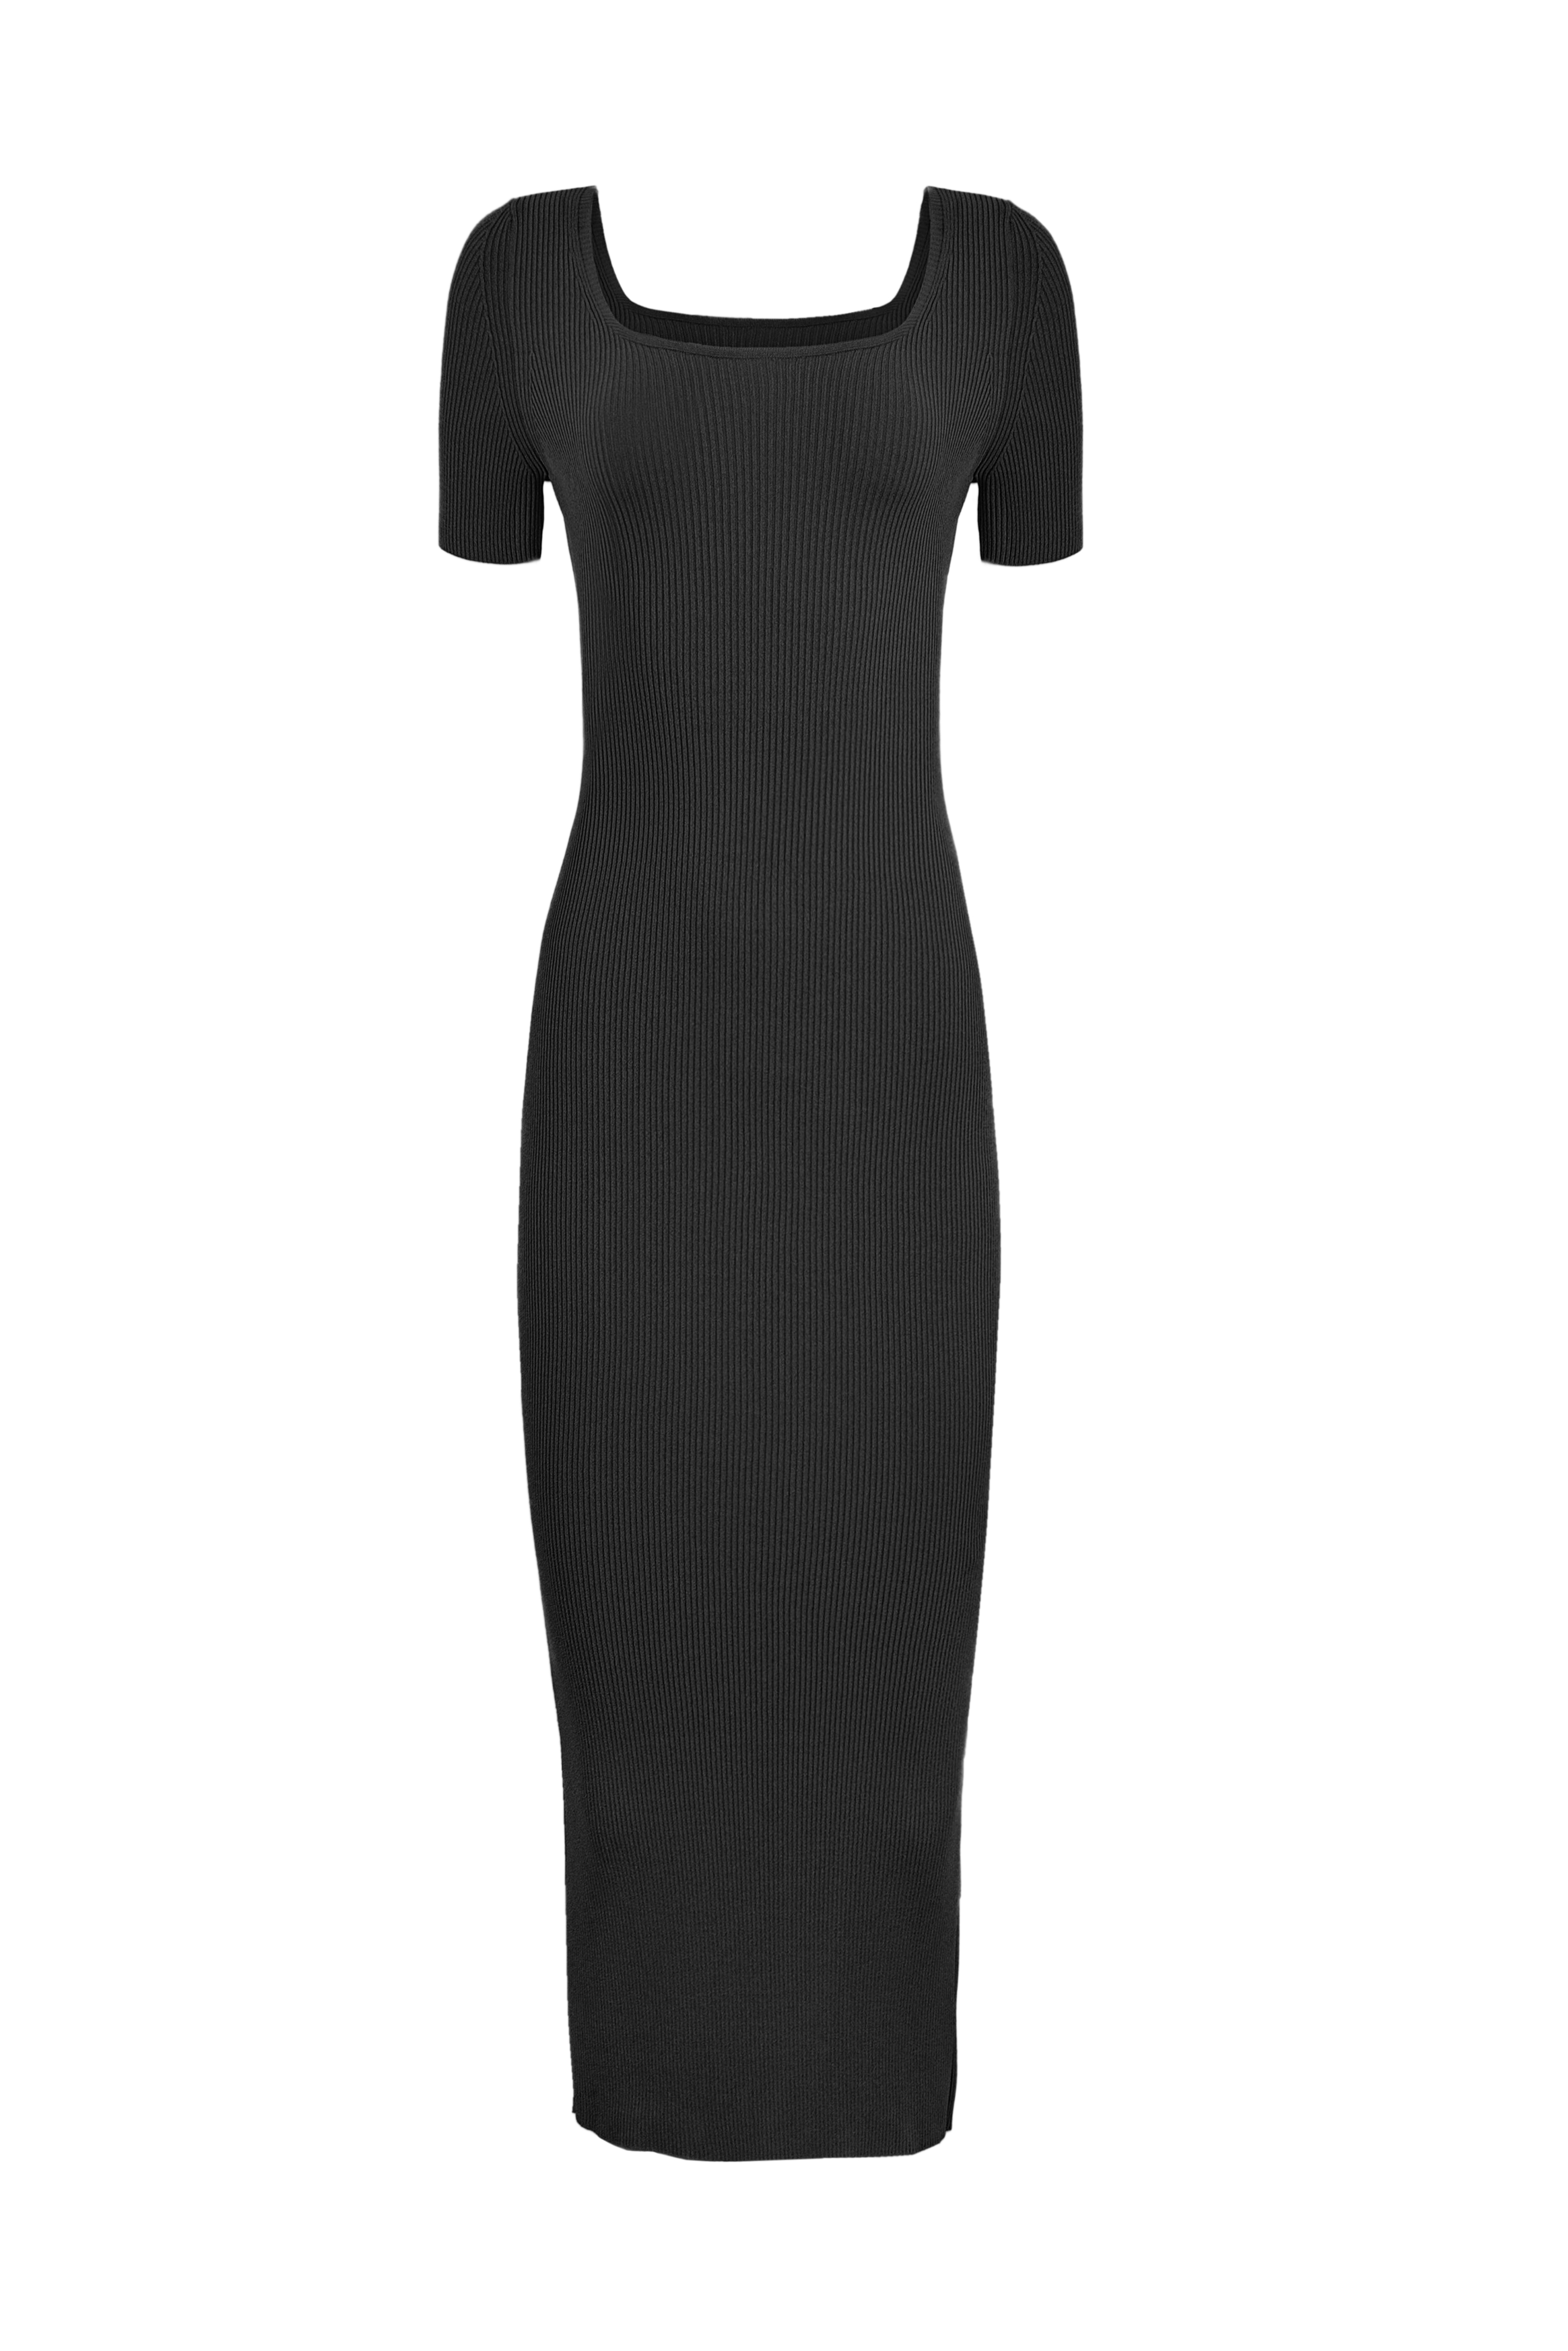 Dress 4147-01 Black from BRUSNiKA